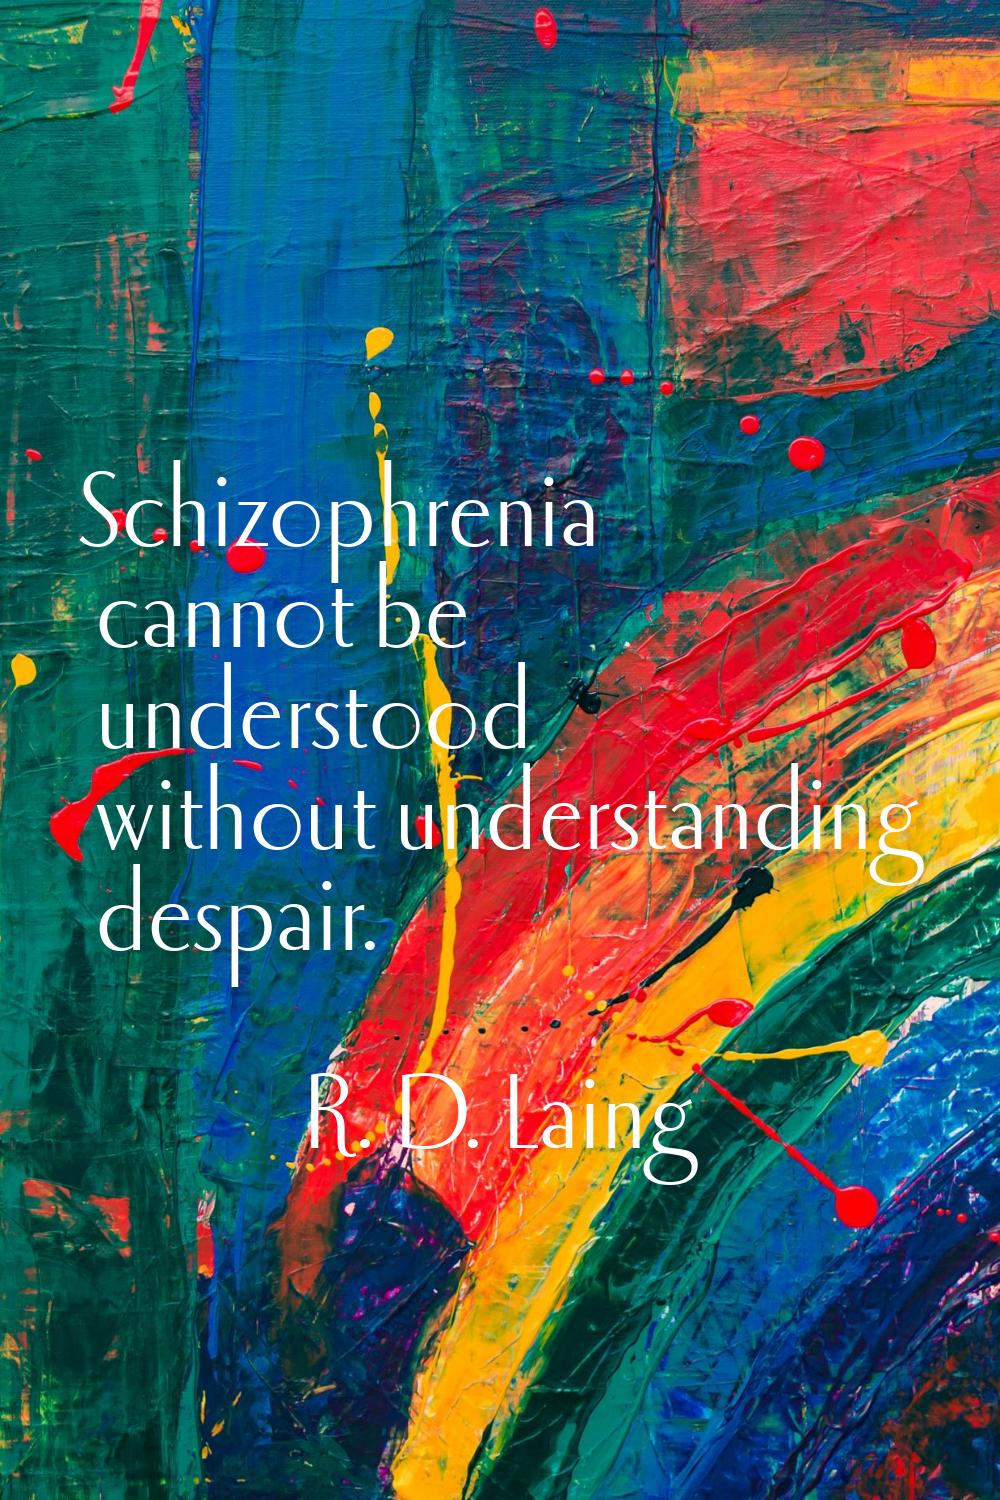 Schizophrenia cannot be understood without understanding despair.